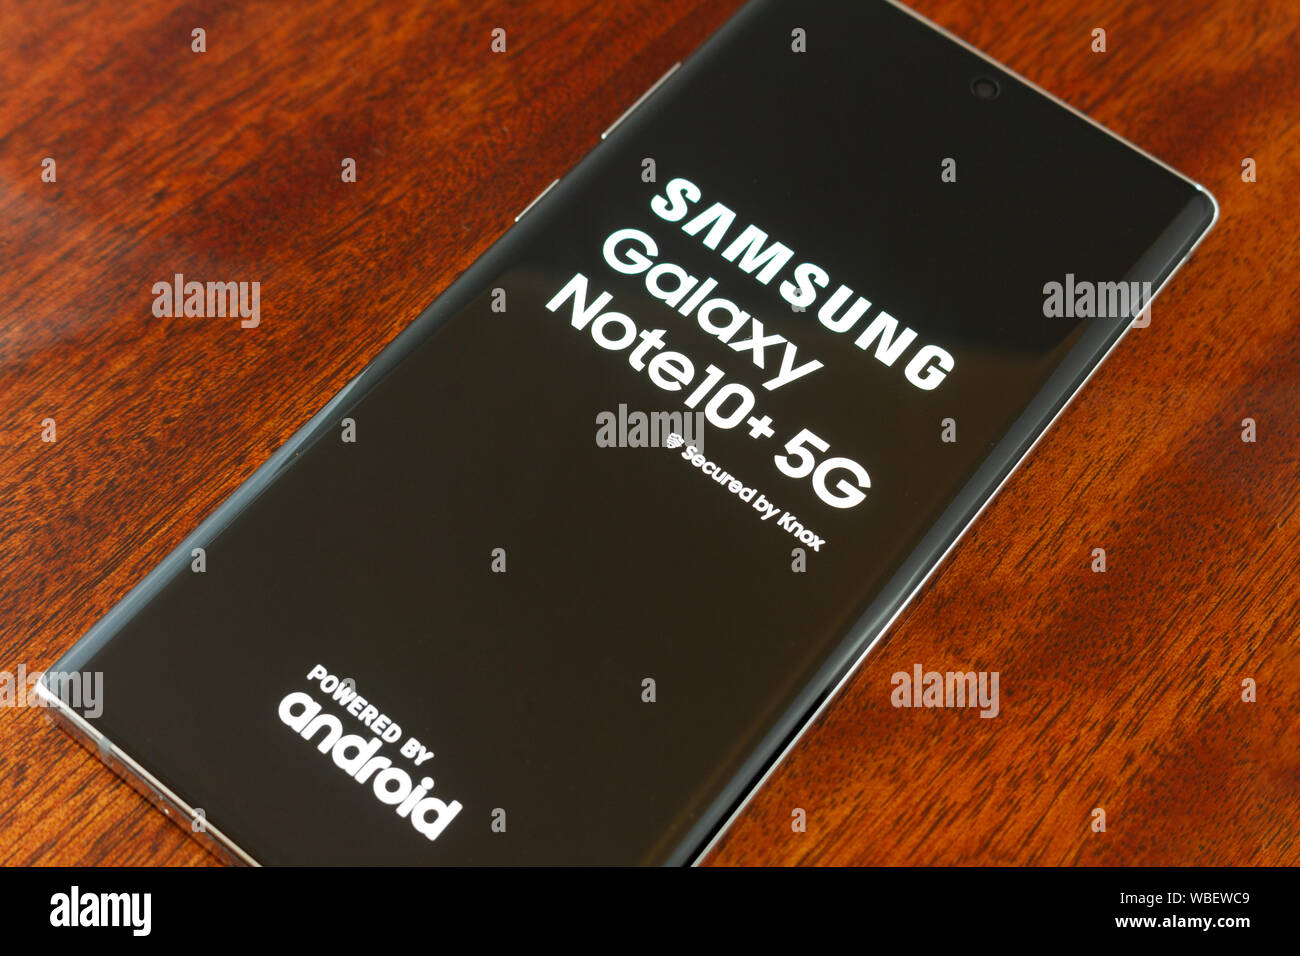 Samsung Galaxy Note 10 5G Galaxy Note10 5G technical